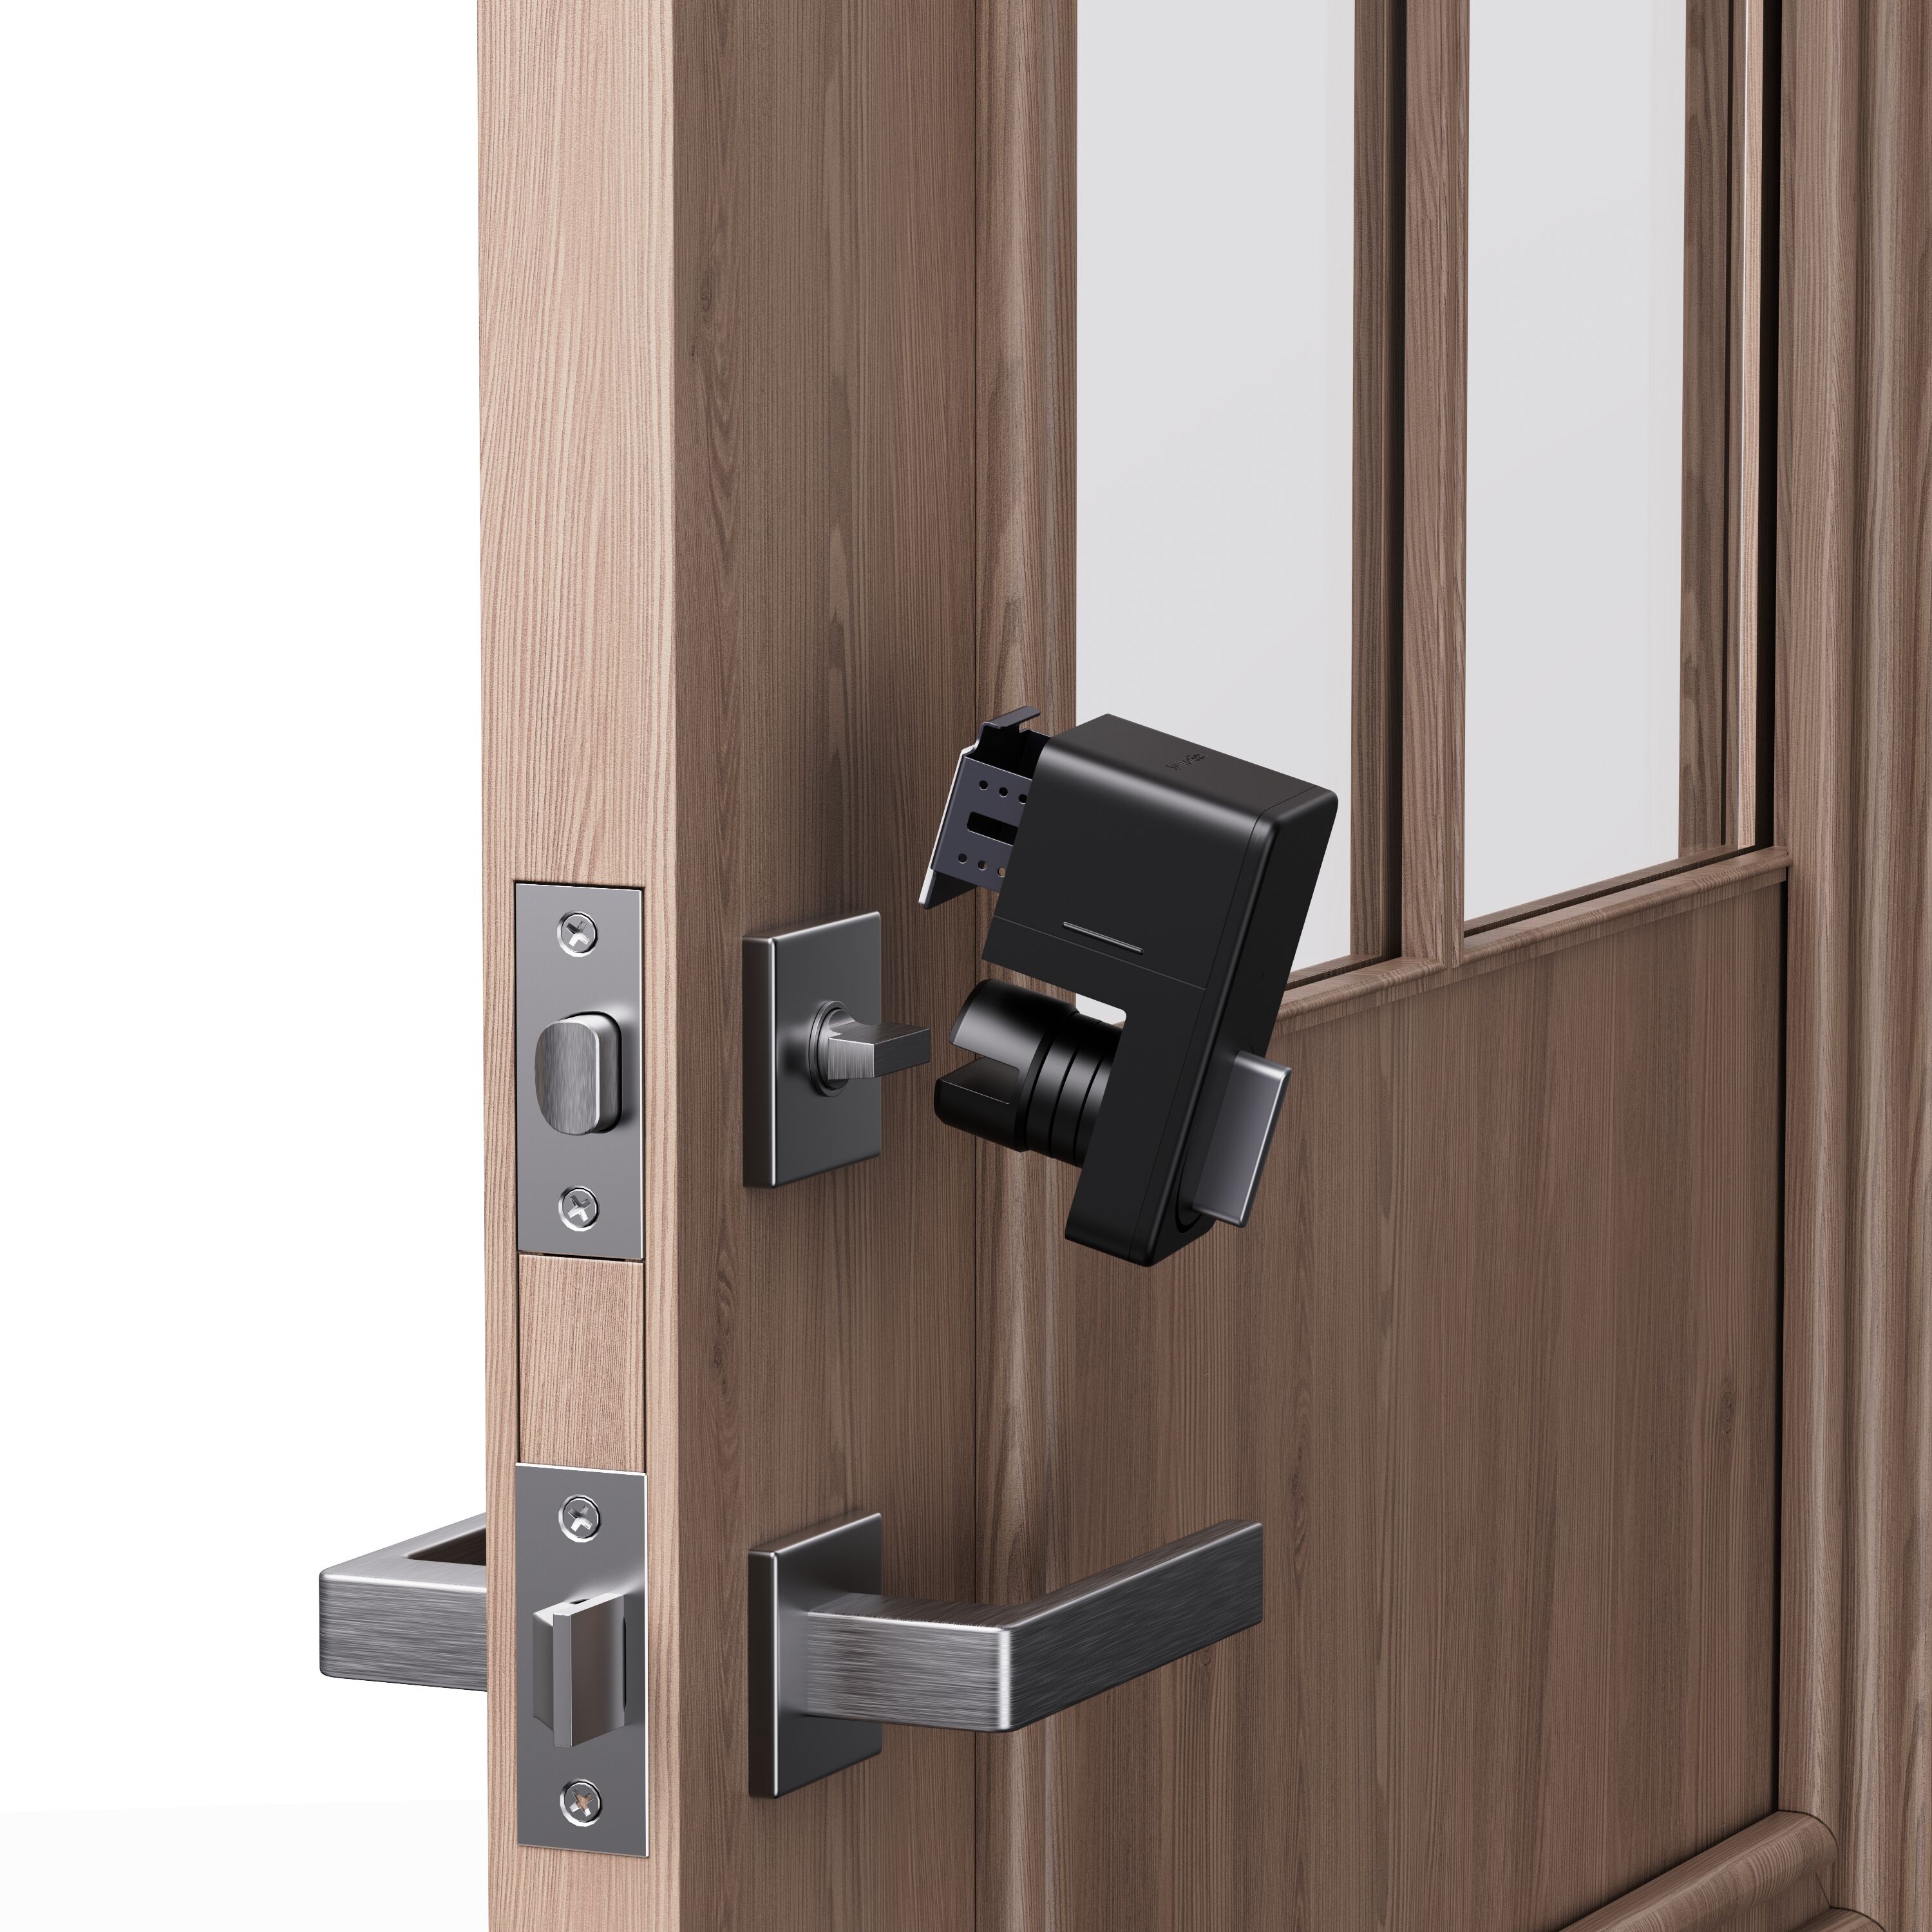 SwitchBot Lock – A modular smart lock for your existing deadbolt